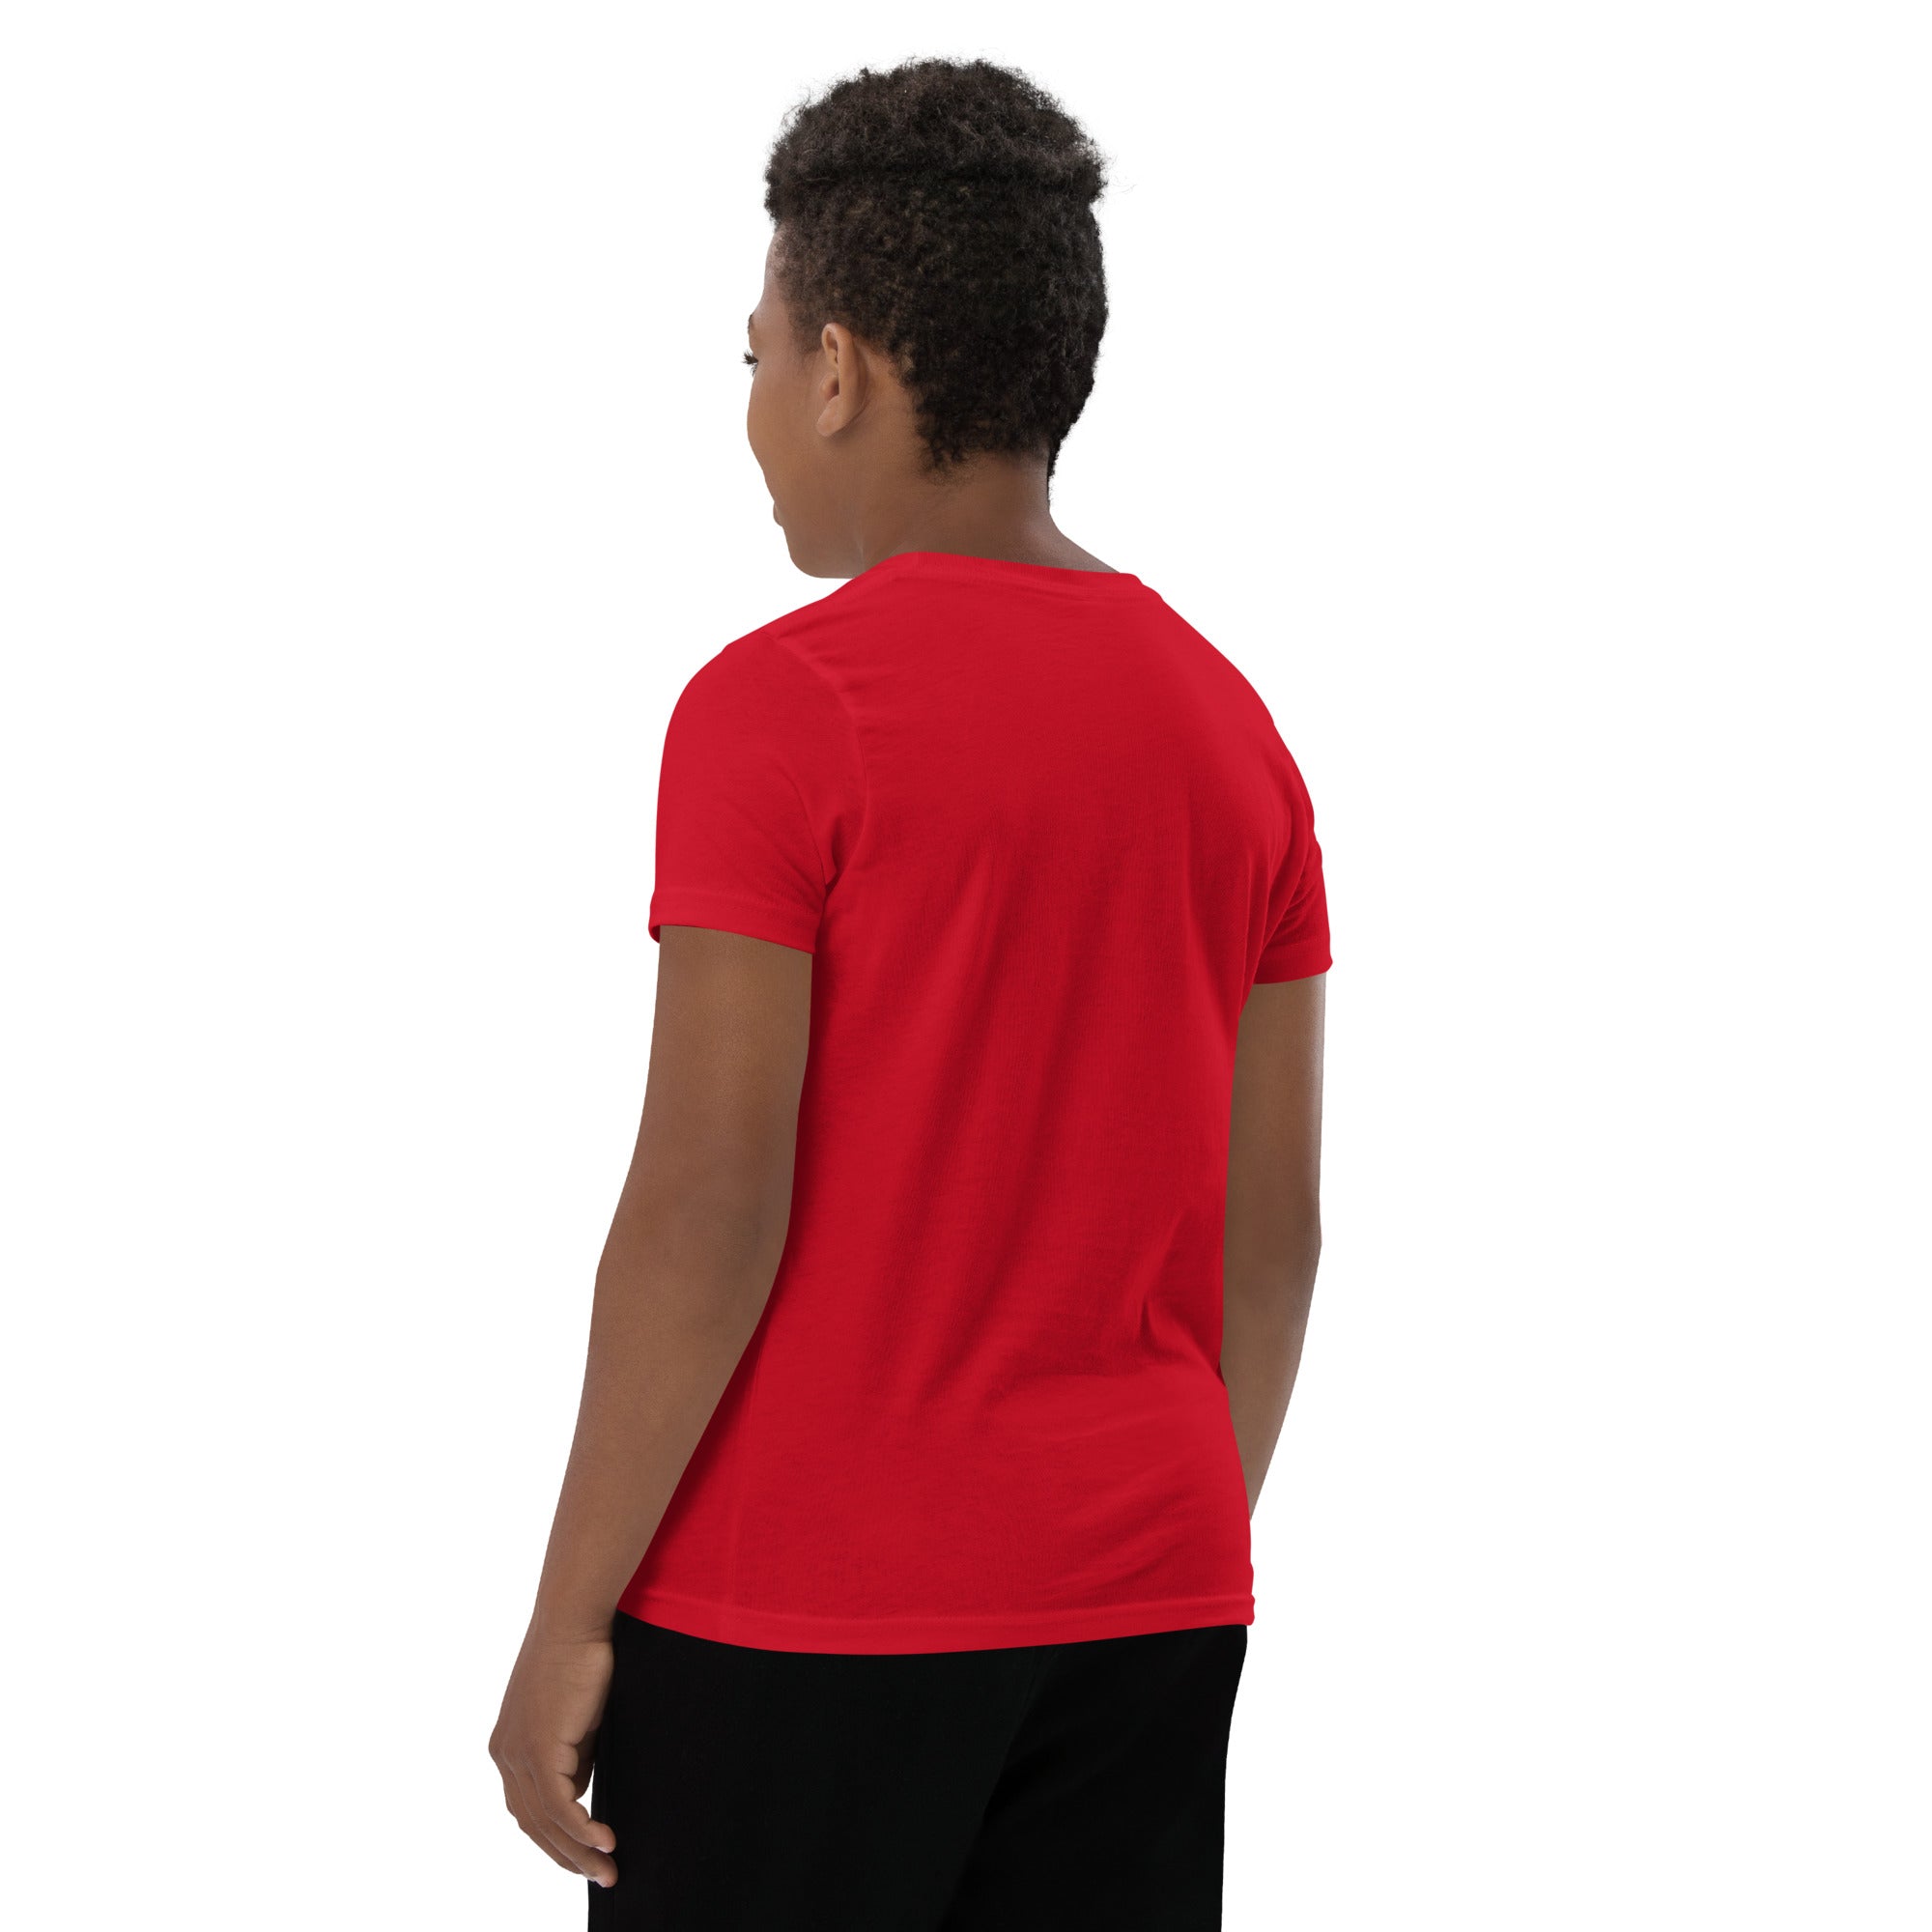 Logo White - Red Youth Short Sleeve T-Shirt